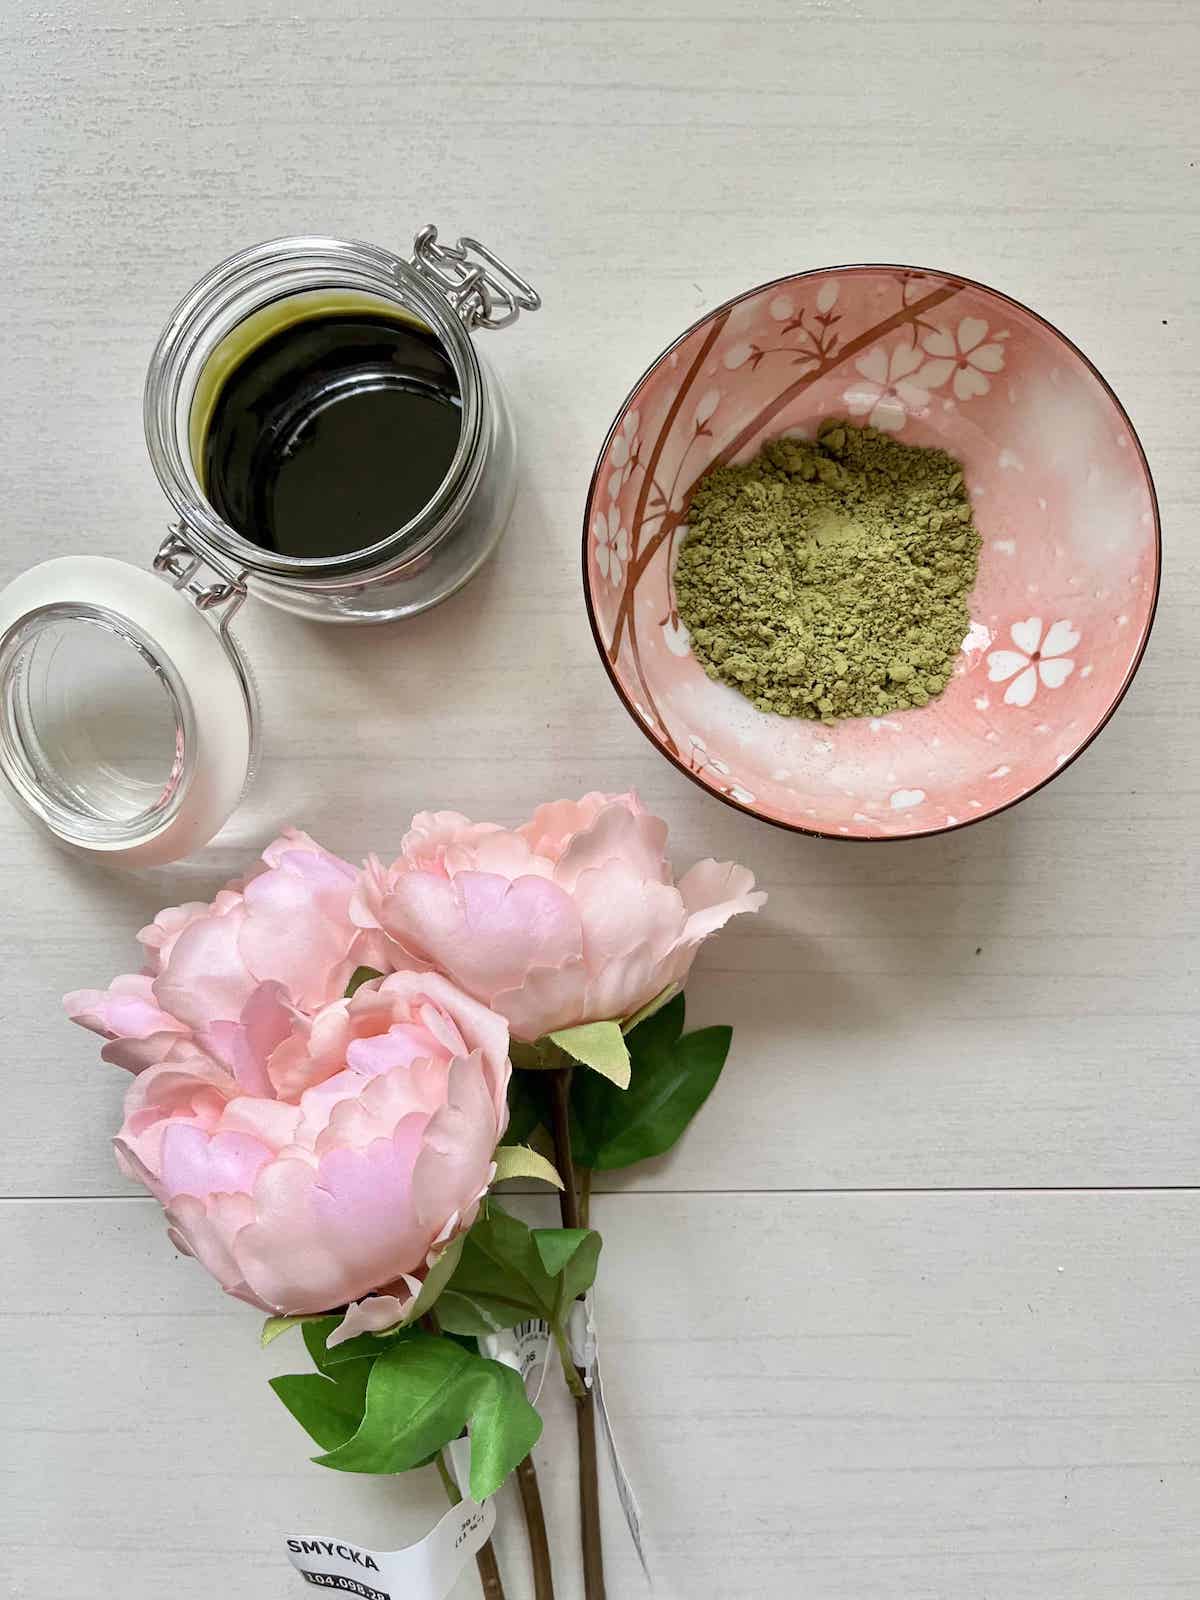 Green tea simple syrup next to matcha powder.